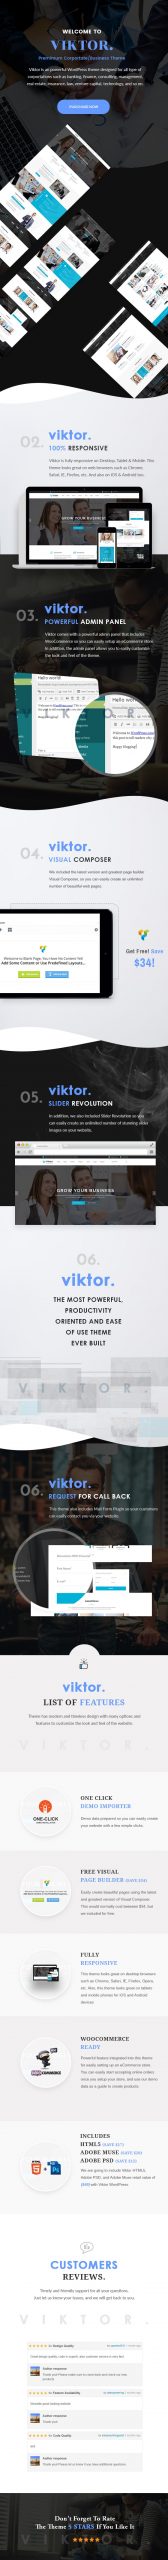 Viktor - Responsive Corporate WordPress Theme - 1